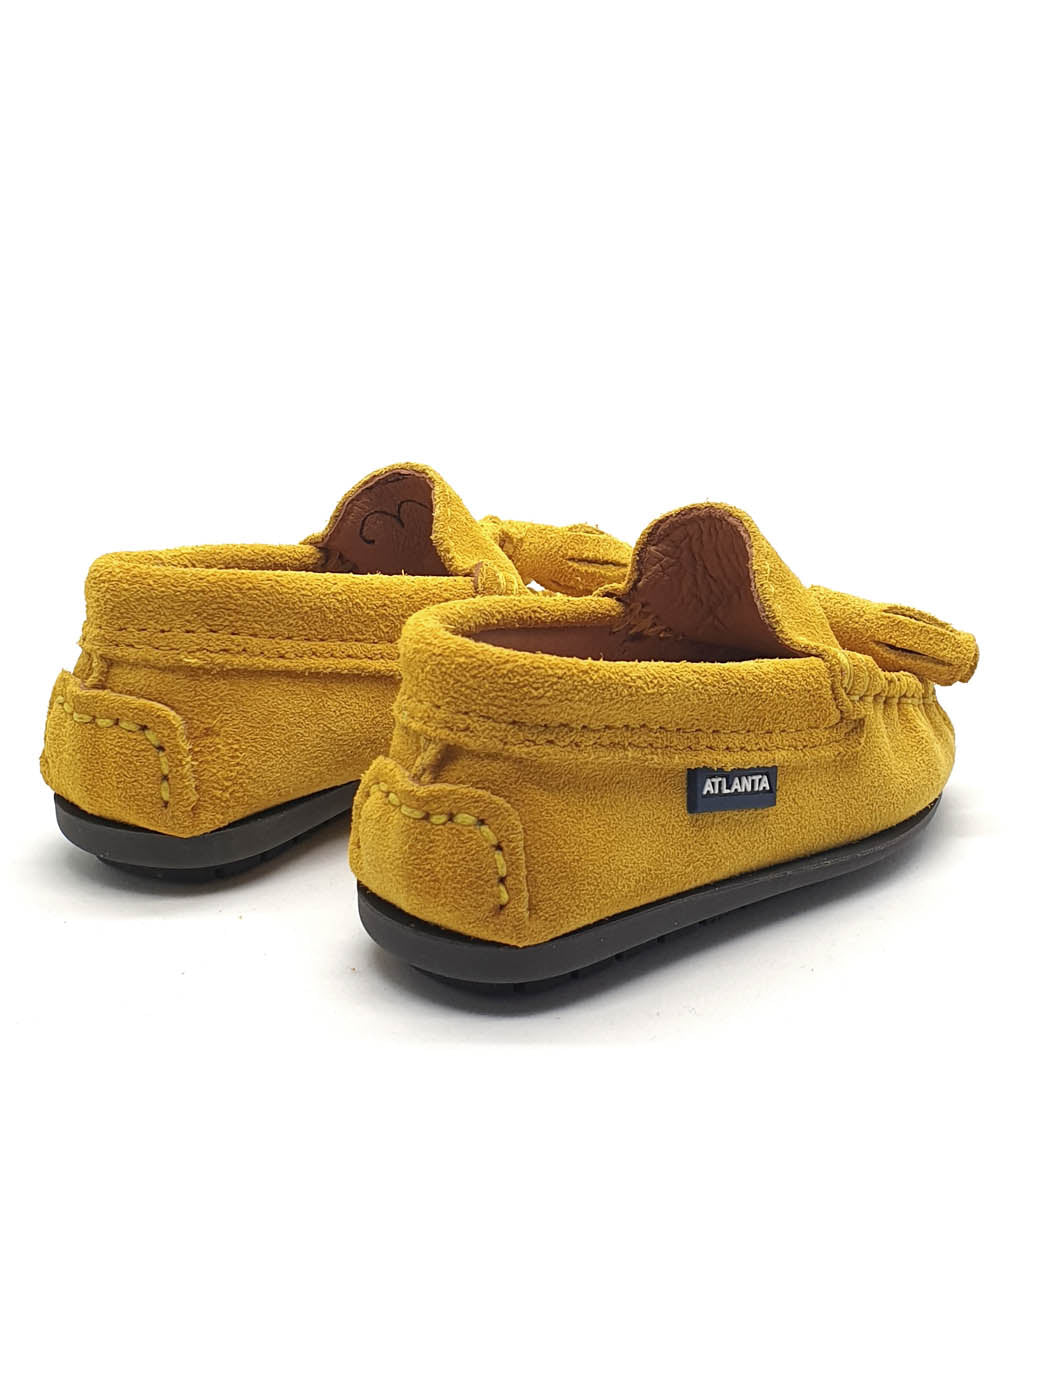 Atlanta Mocassin- Baby Shoes Moccasins Yellow-016G041